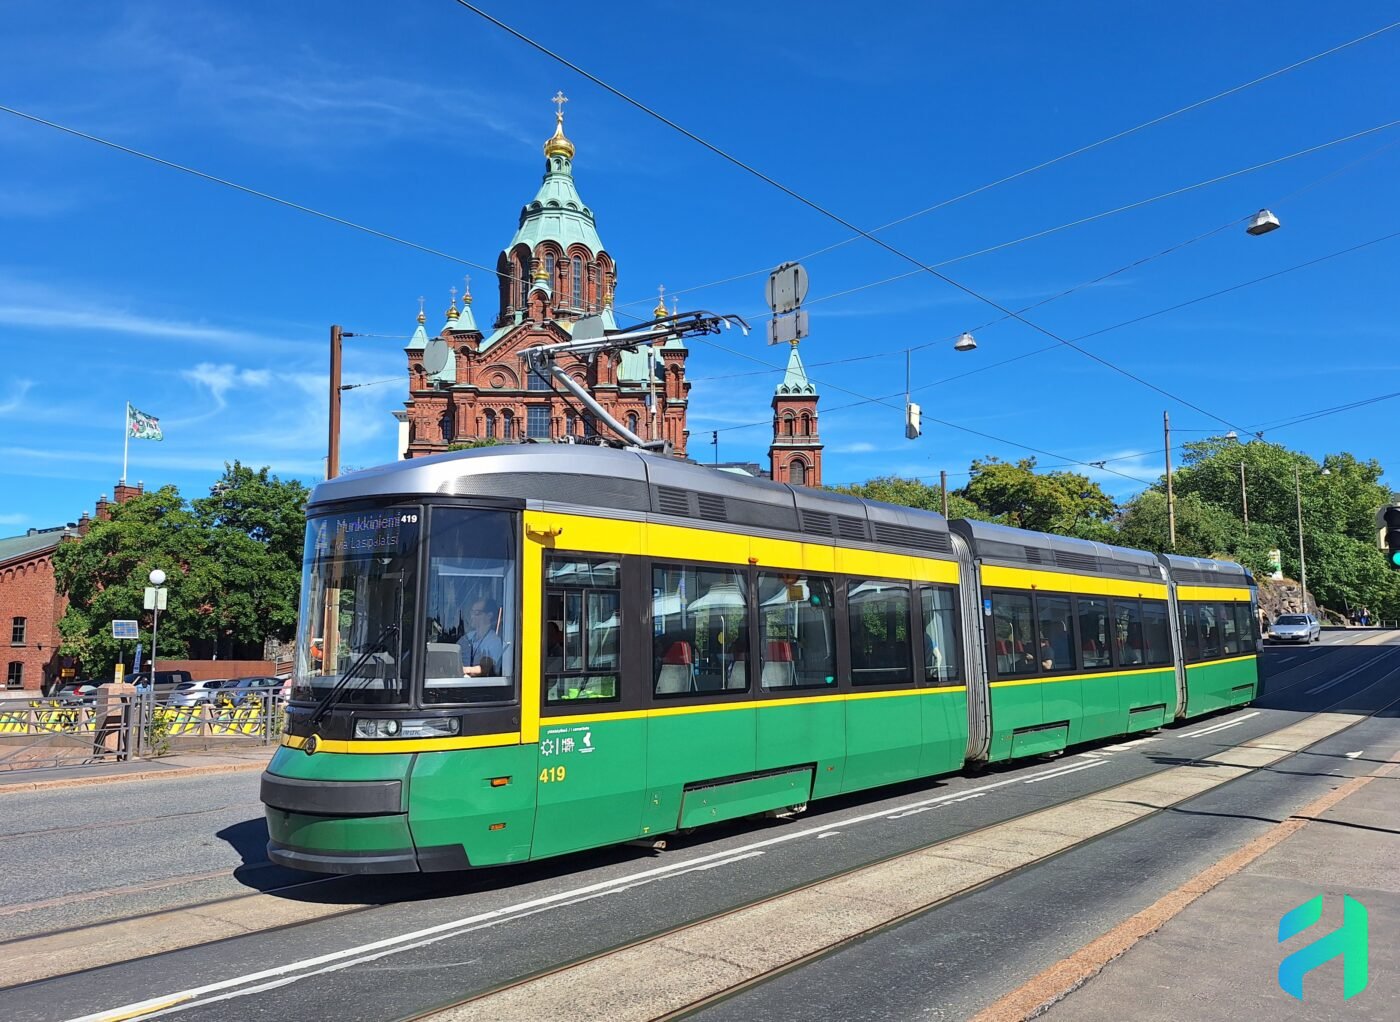 A tram in the Helsinki Centre